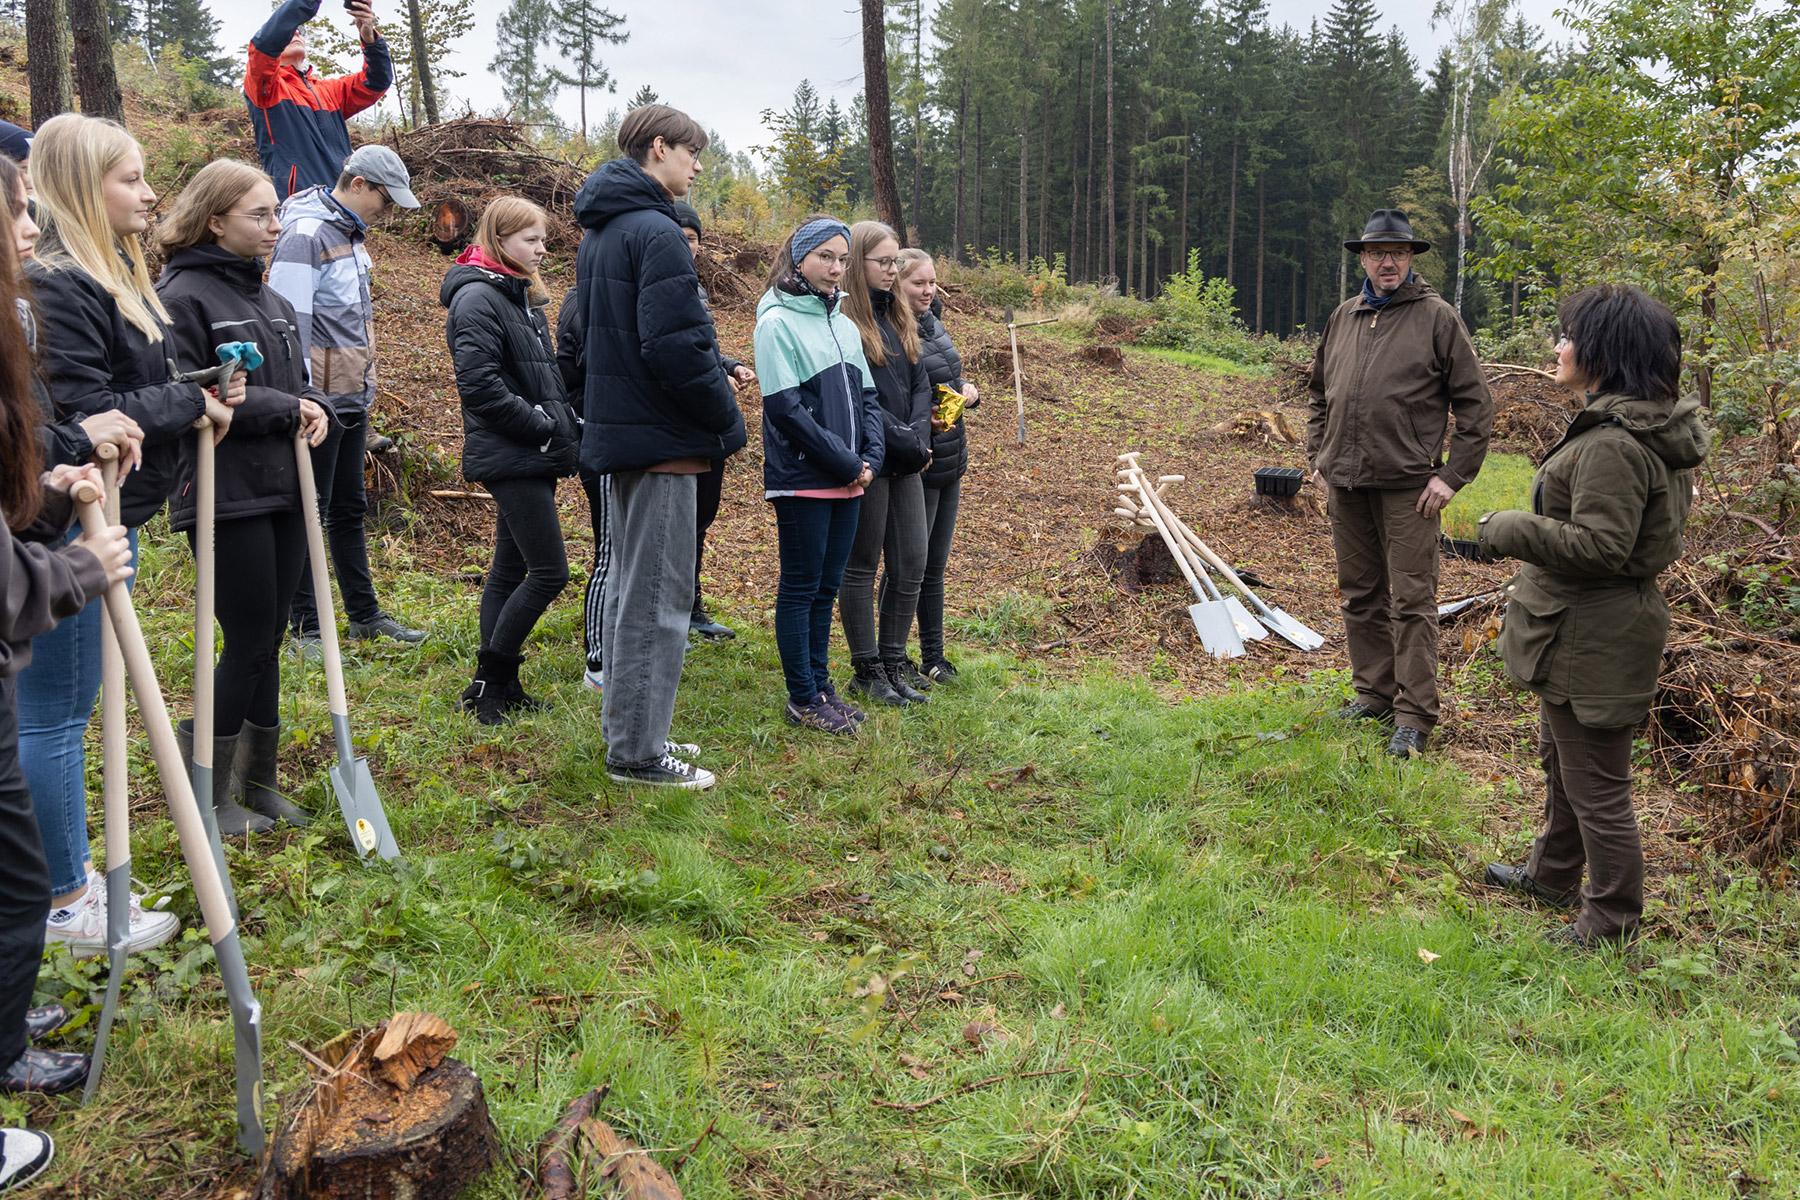 Saxony youth planting trees